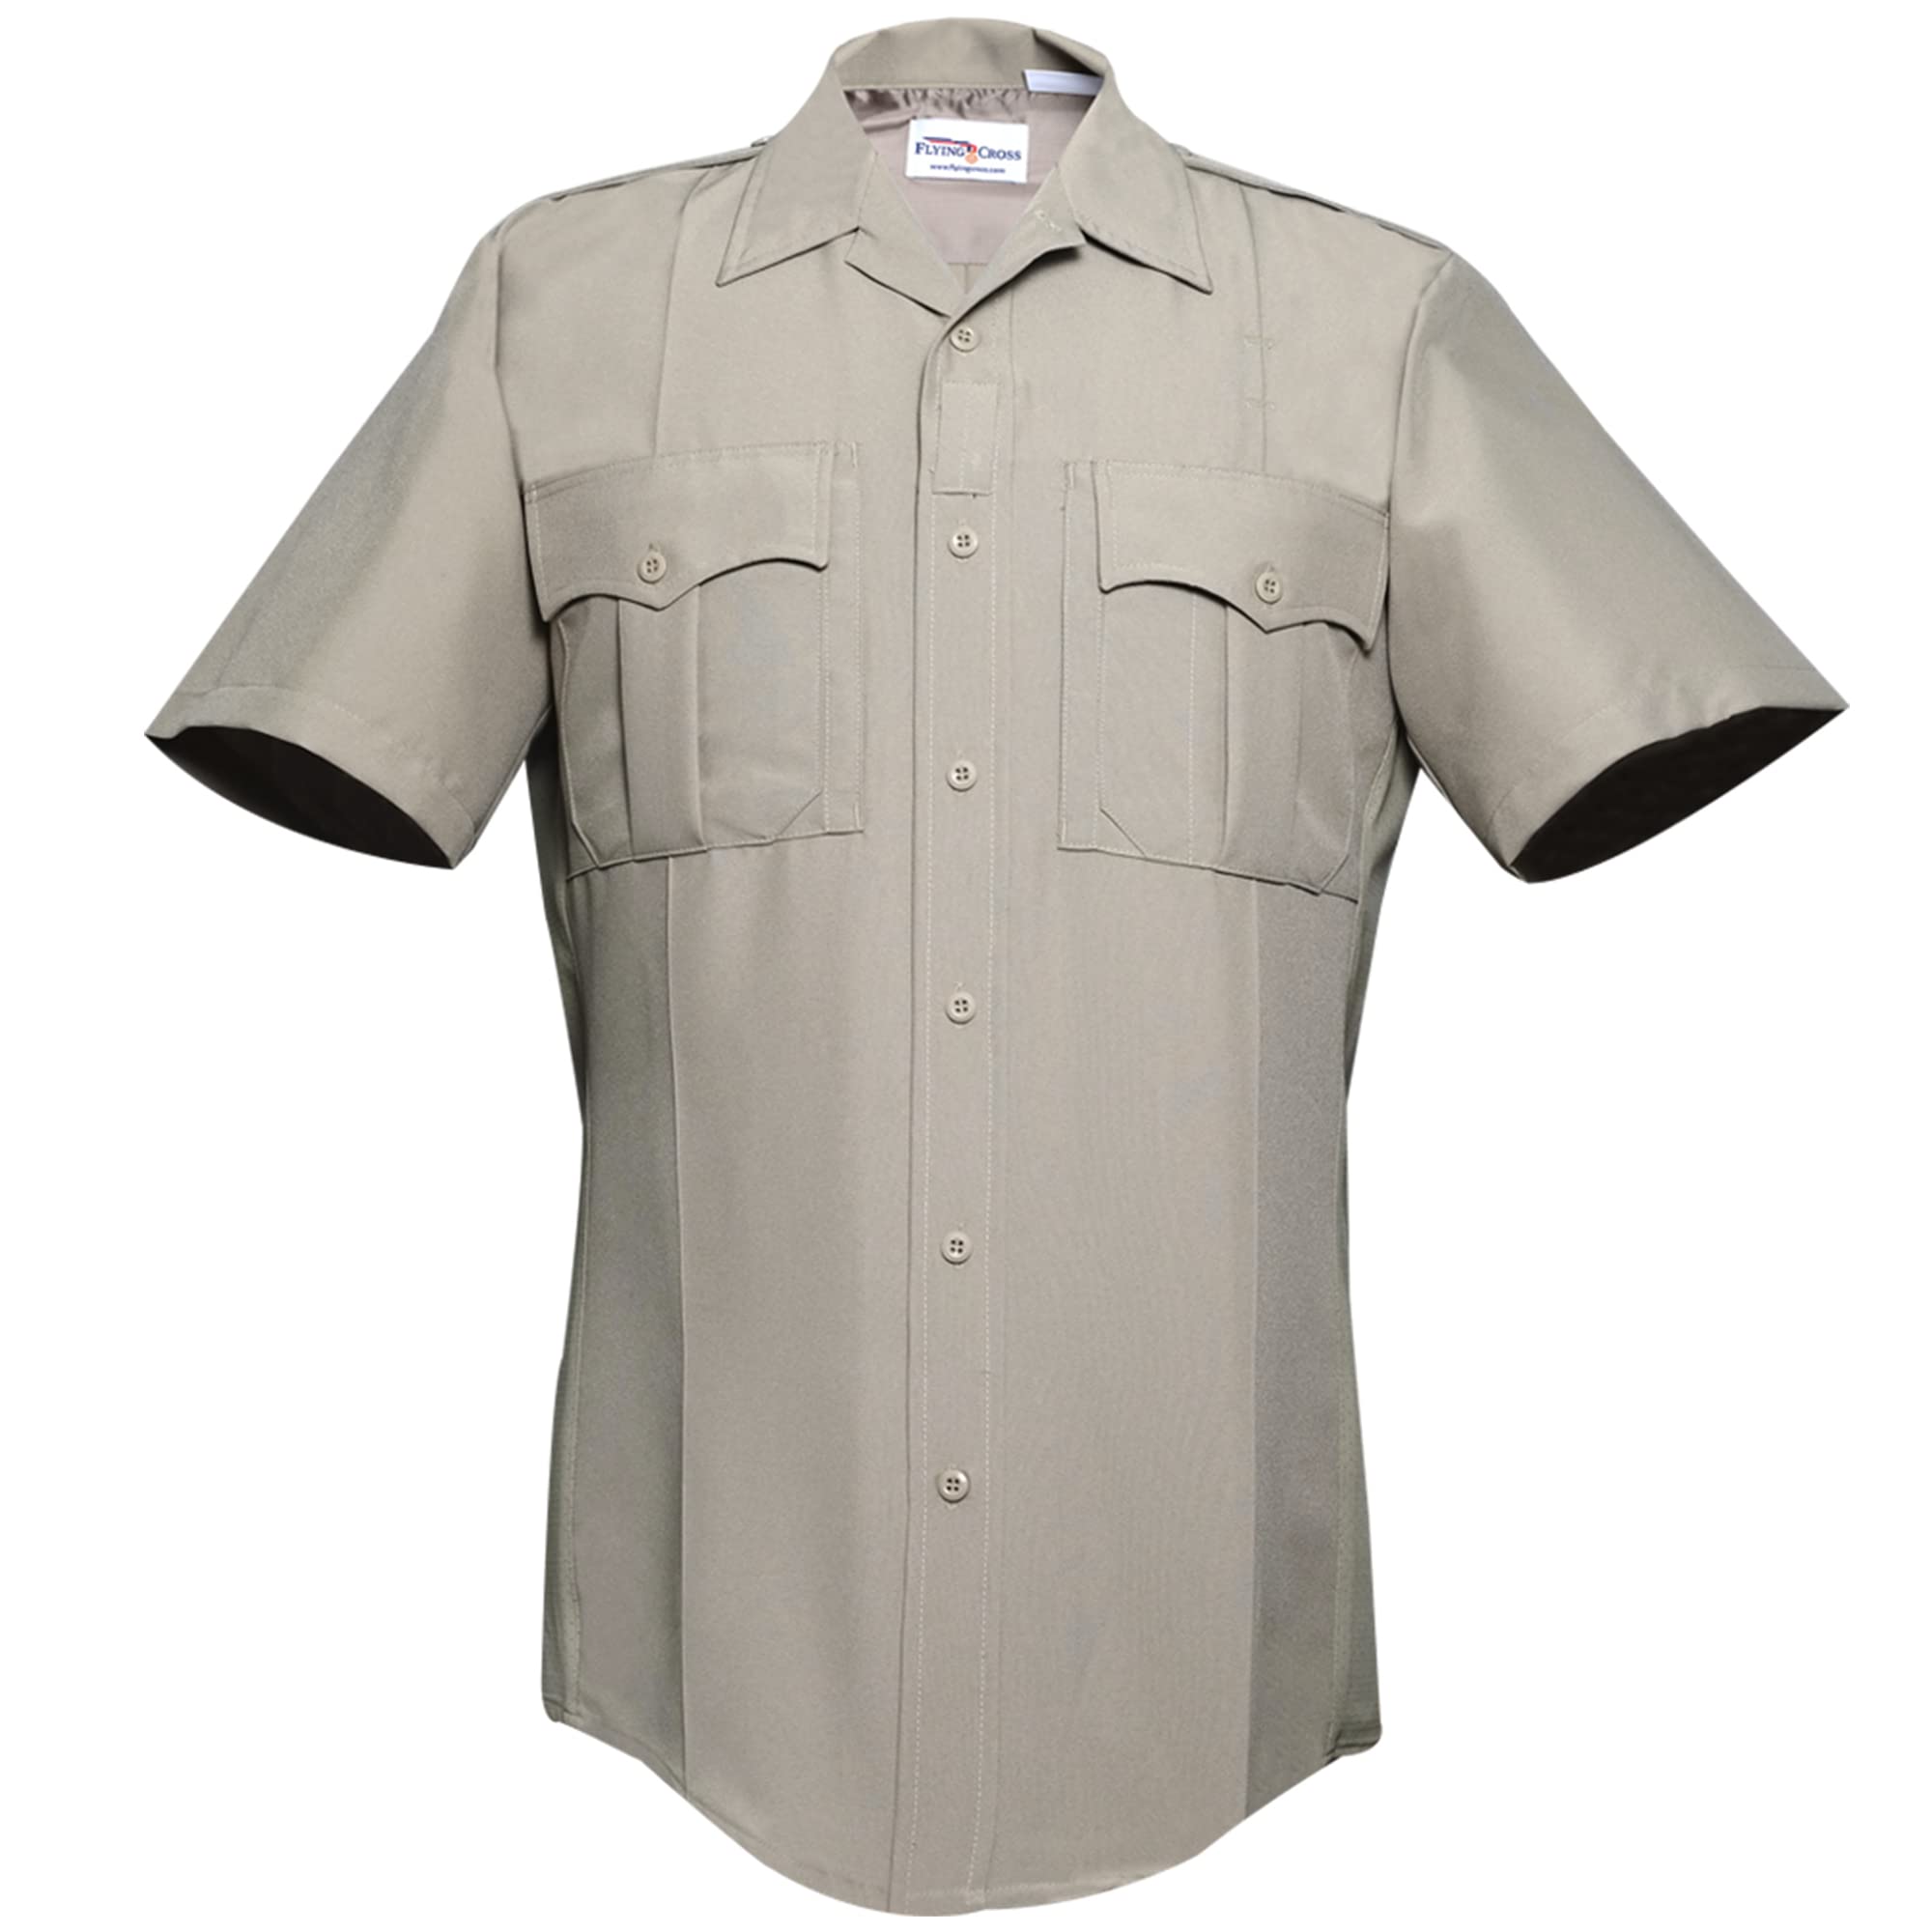 Flying Cross Women’s Police Officer Shirt Uniform Short Sleeve with Zip